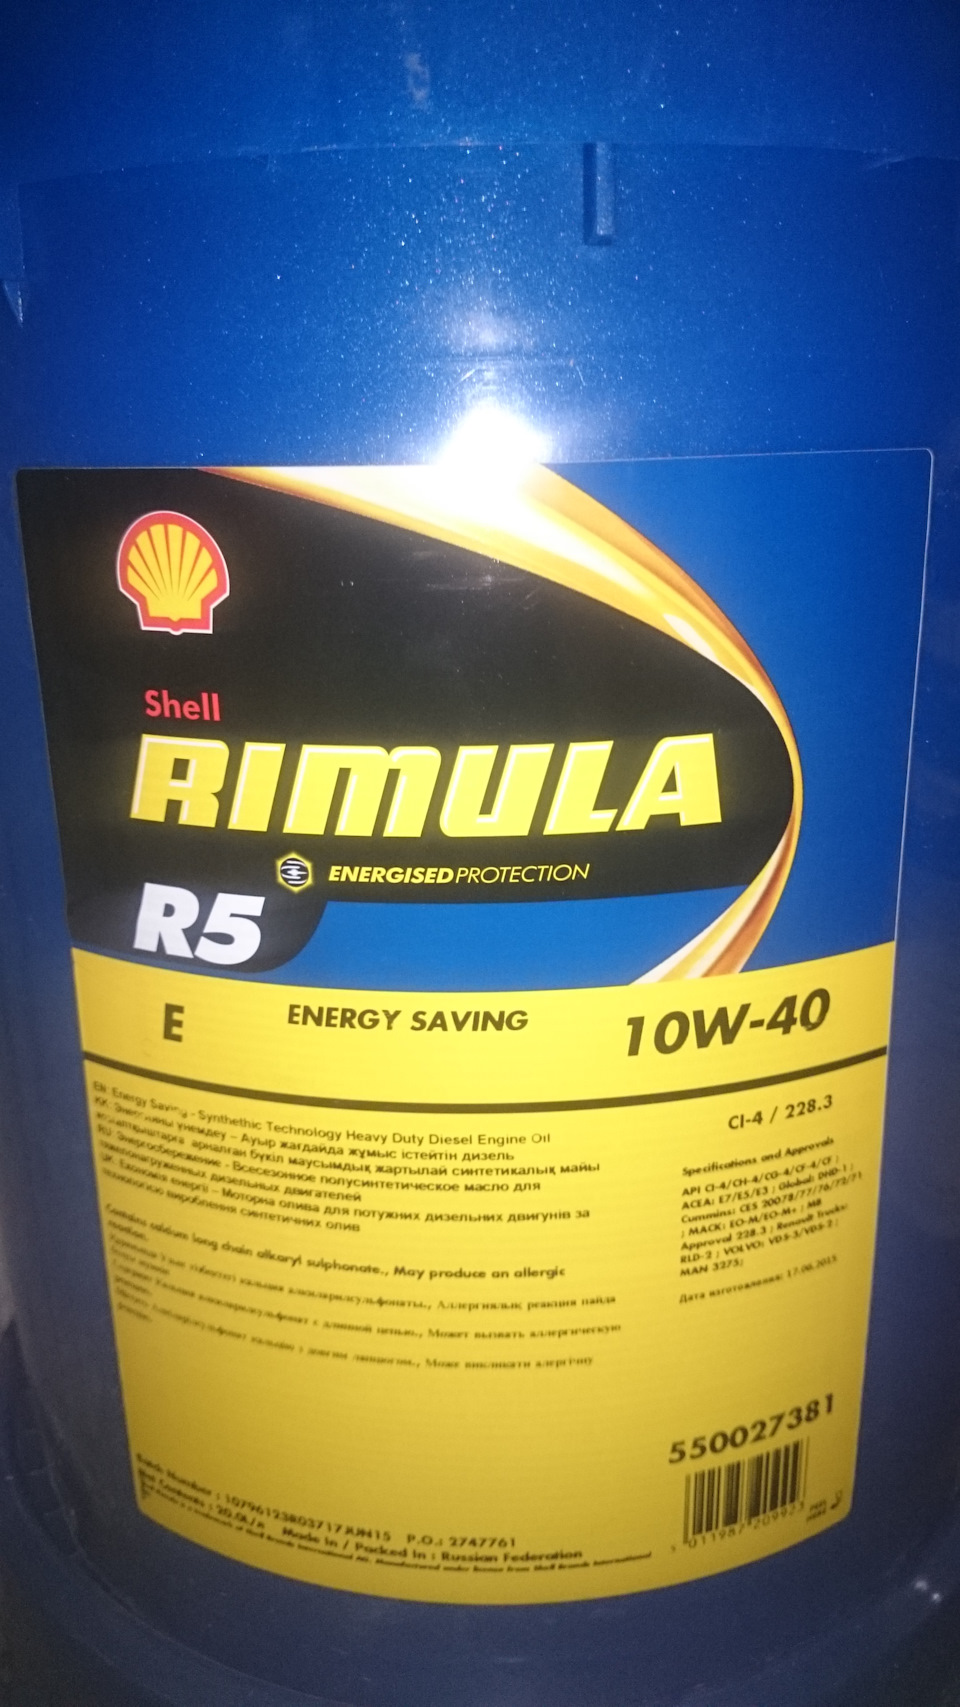 Shell Rimula r5 10w-40. 550027381 Shell. Дизельное масло в бензиновый. Масло Шелл 20 литров.